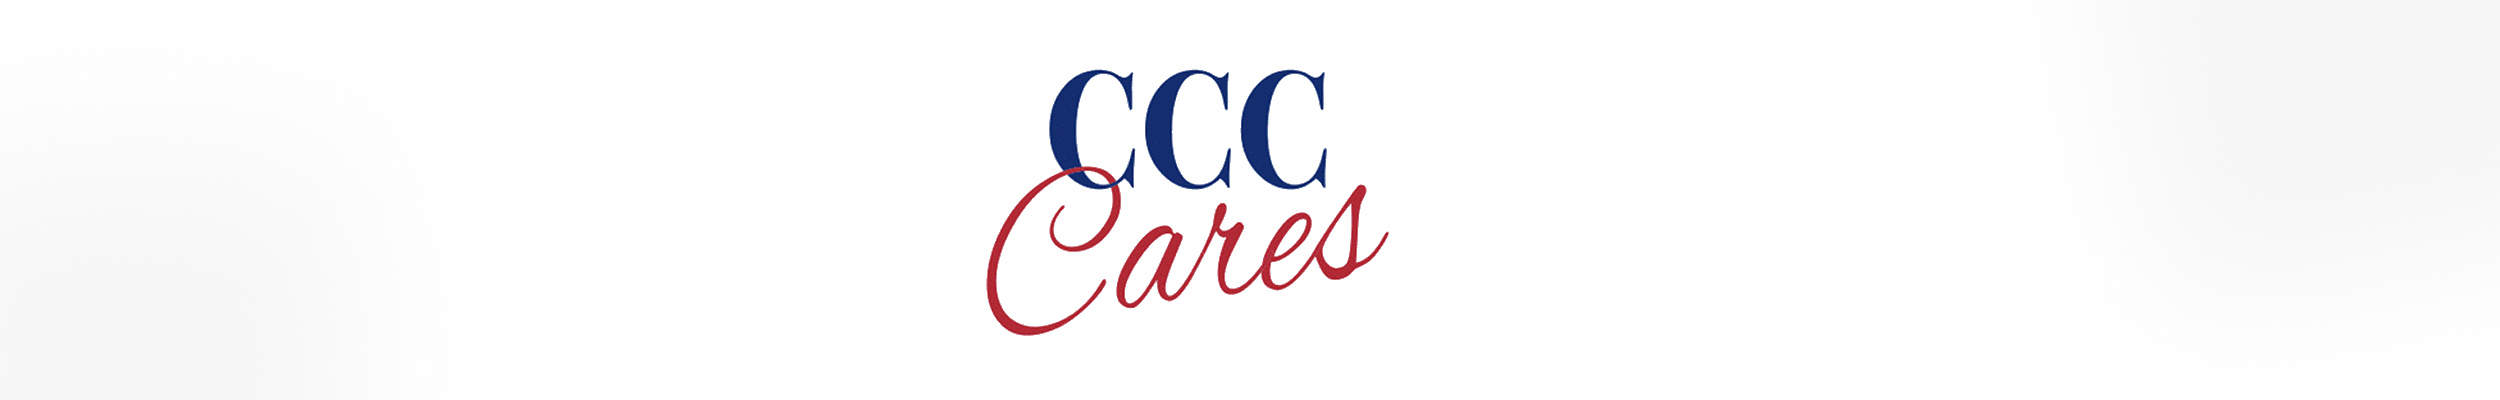 ccc cares logo